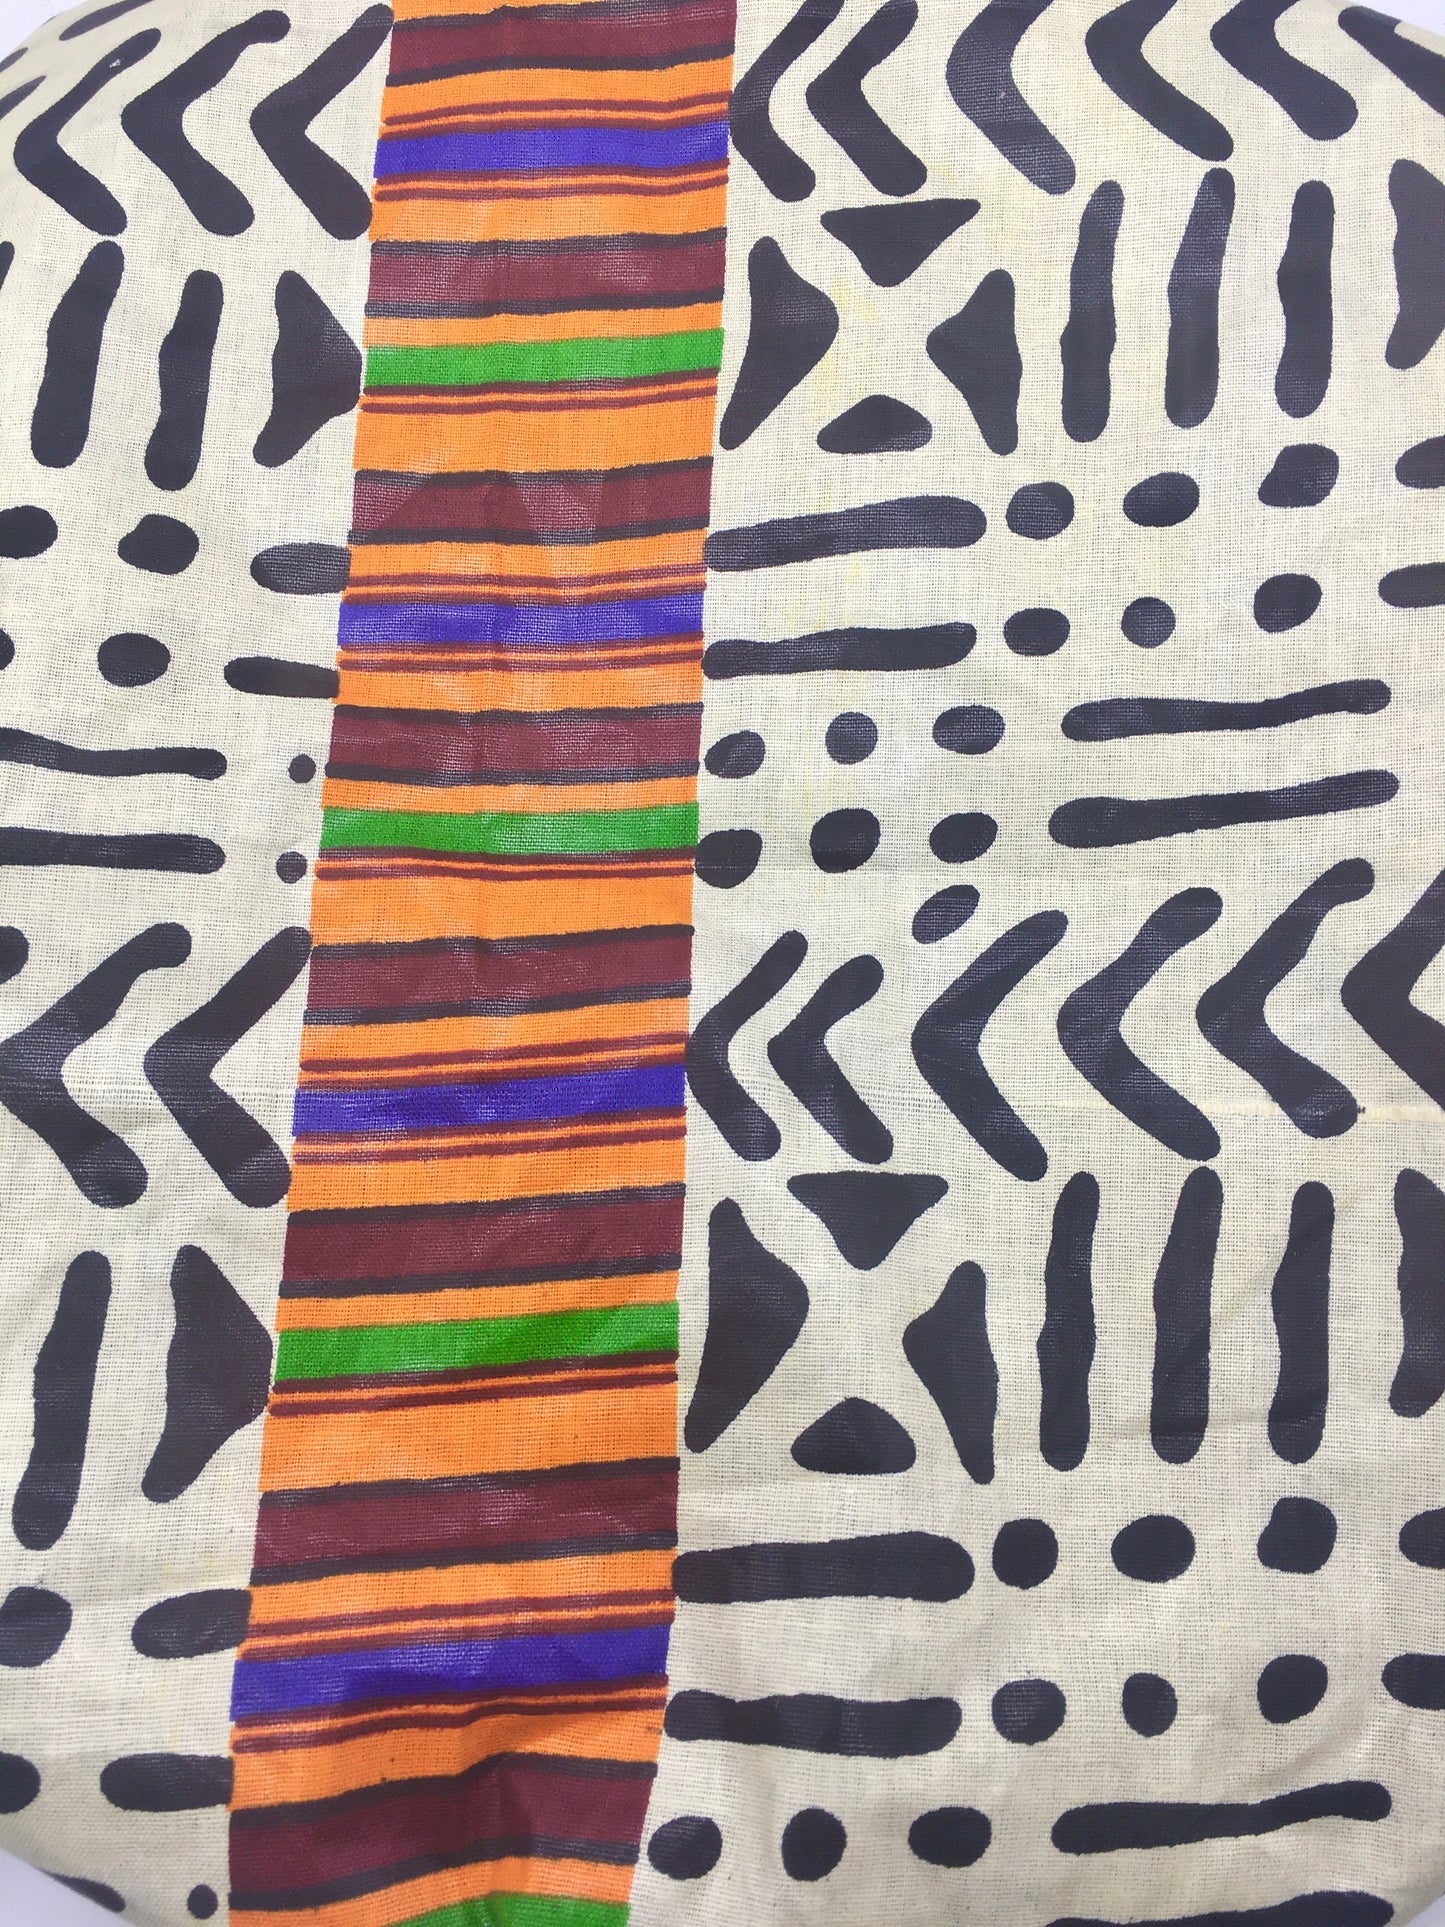 Medium Satin-Lined Bonnet: Multicolored African Print